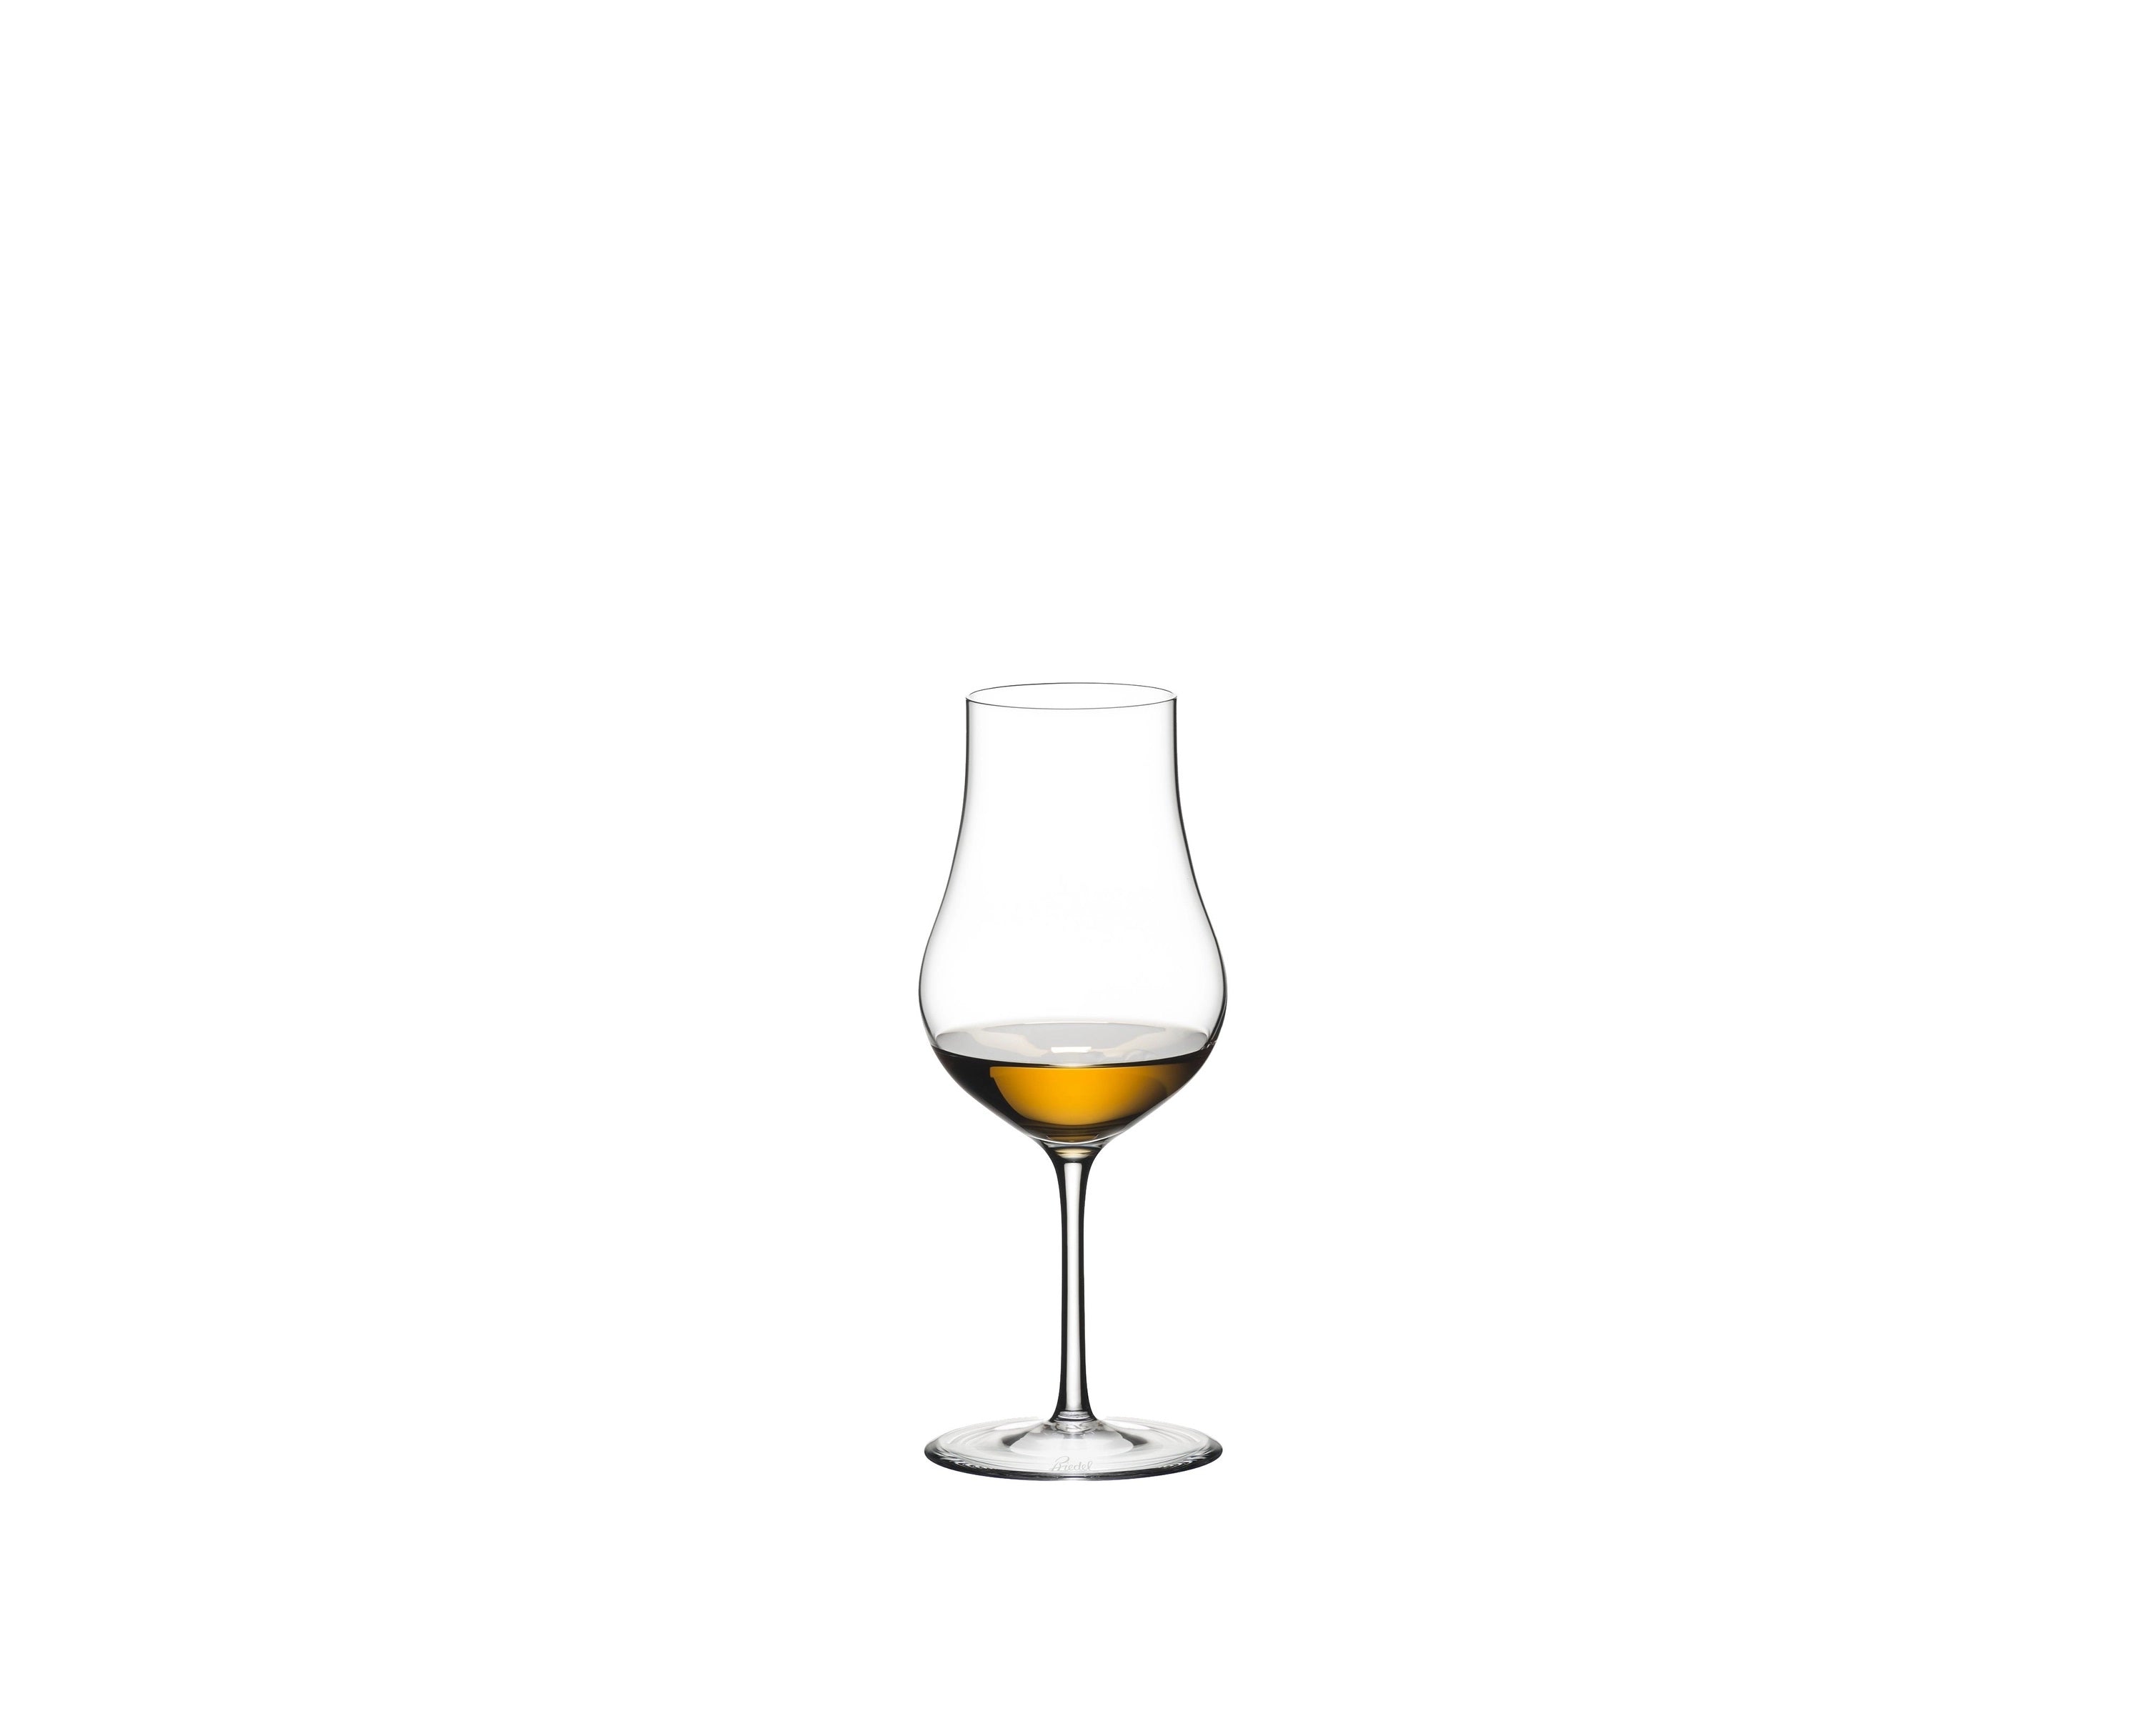 Riedel Sommeliers Cognac Xo Glass, Set of 4 pieces